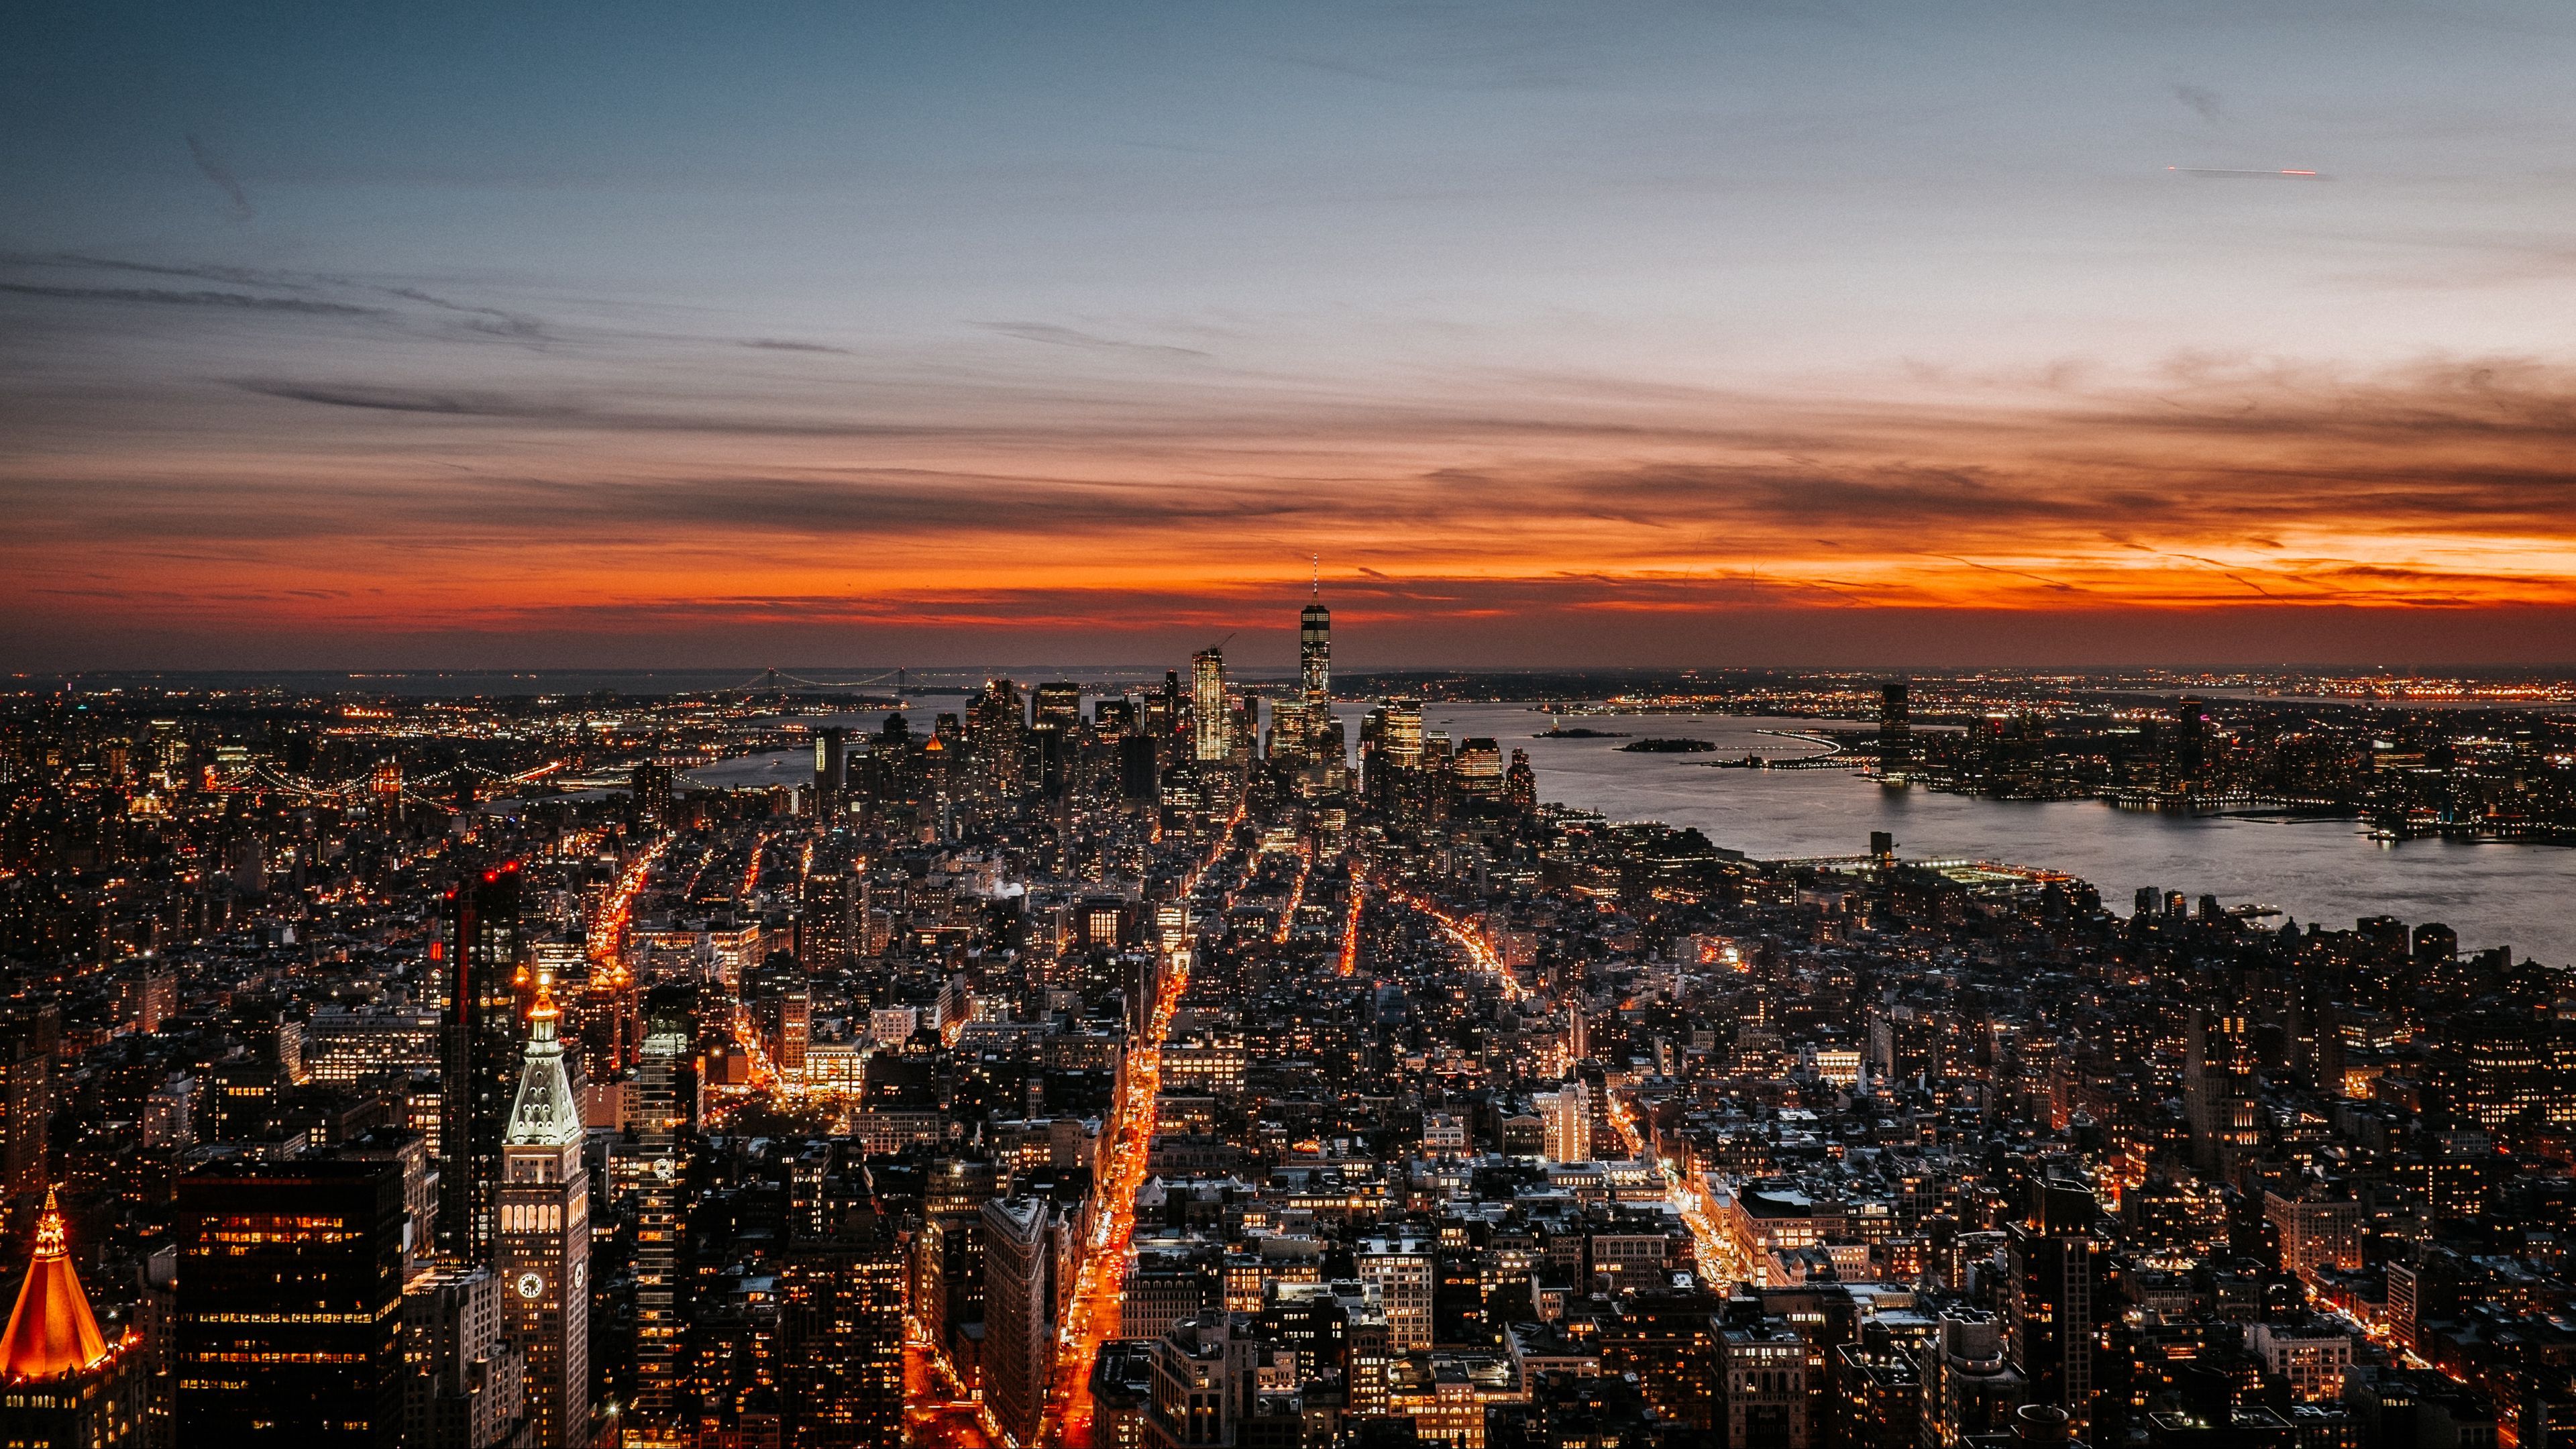 Download wallpaper 3840x2160 new york, night city, skyline, sky, dusk, sunset 4k uhd 16:9 HD background